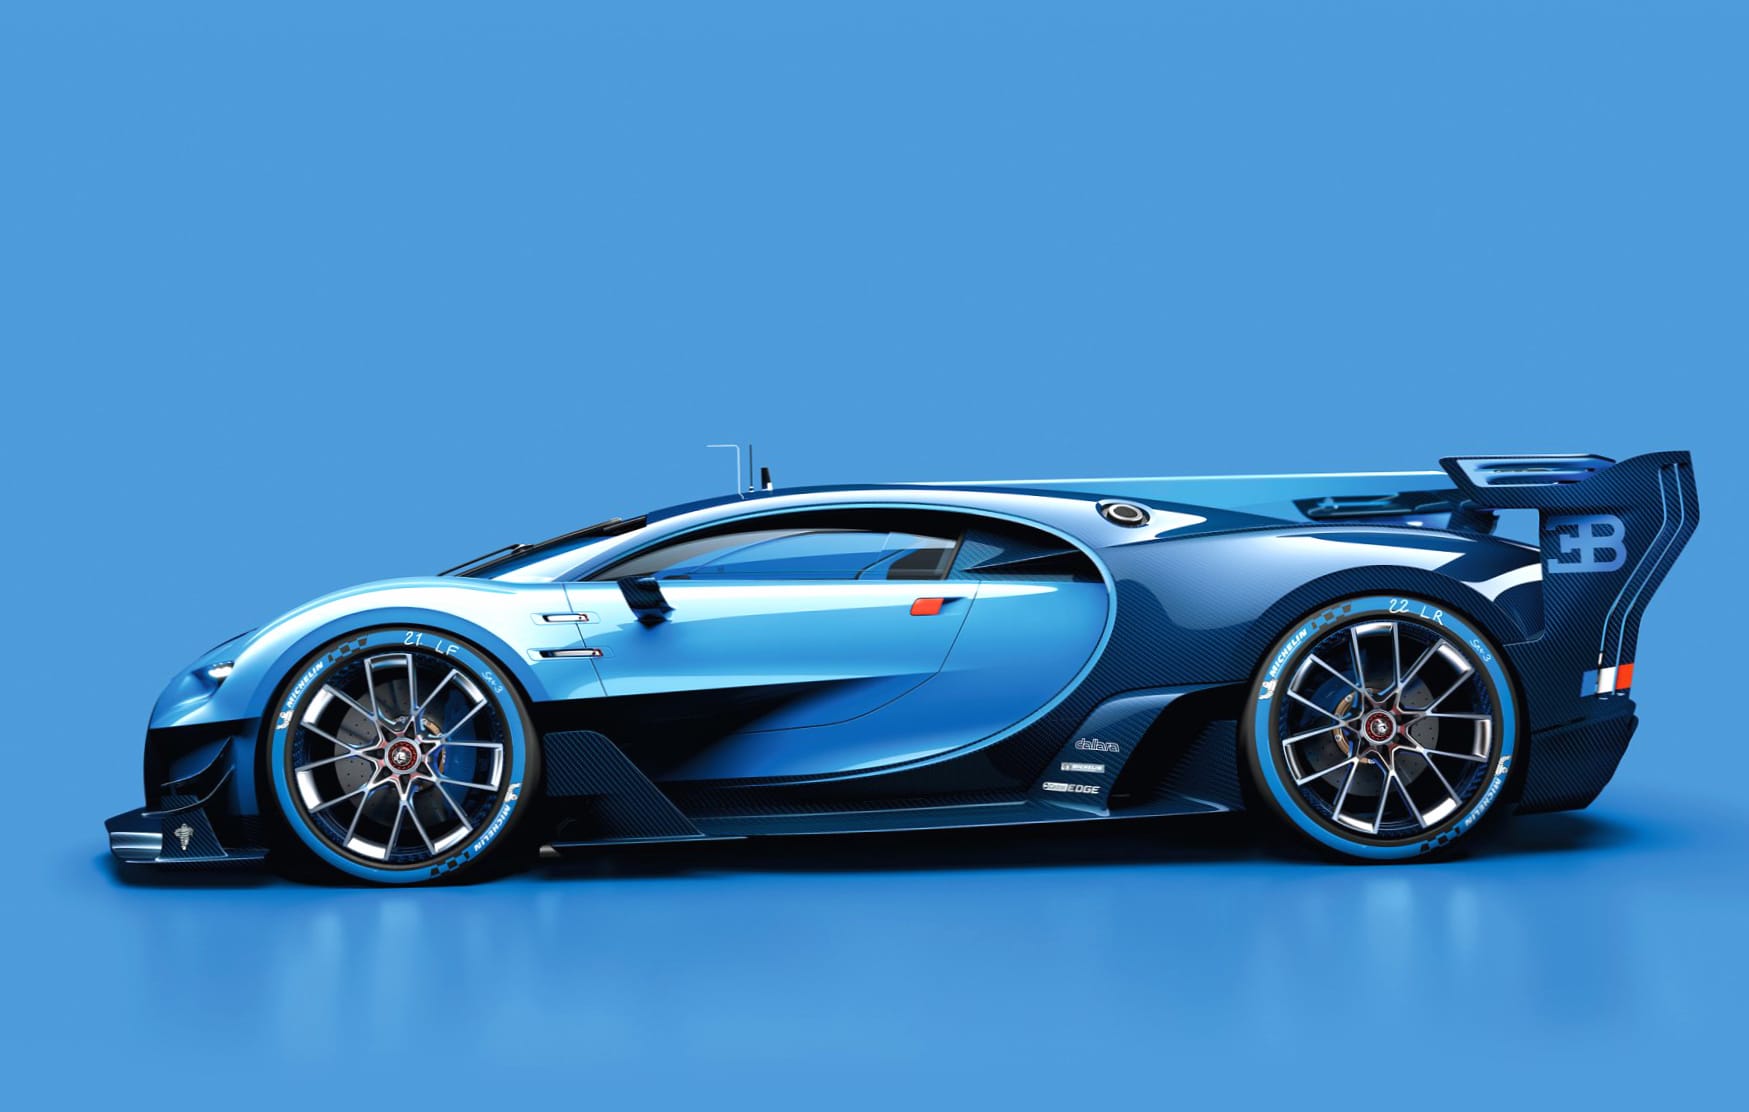 Bugatti Vision Gran Turismo at 2048 x 2048 iPad size wallpapers HD quality